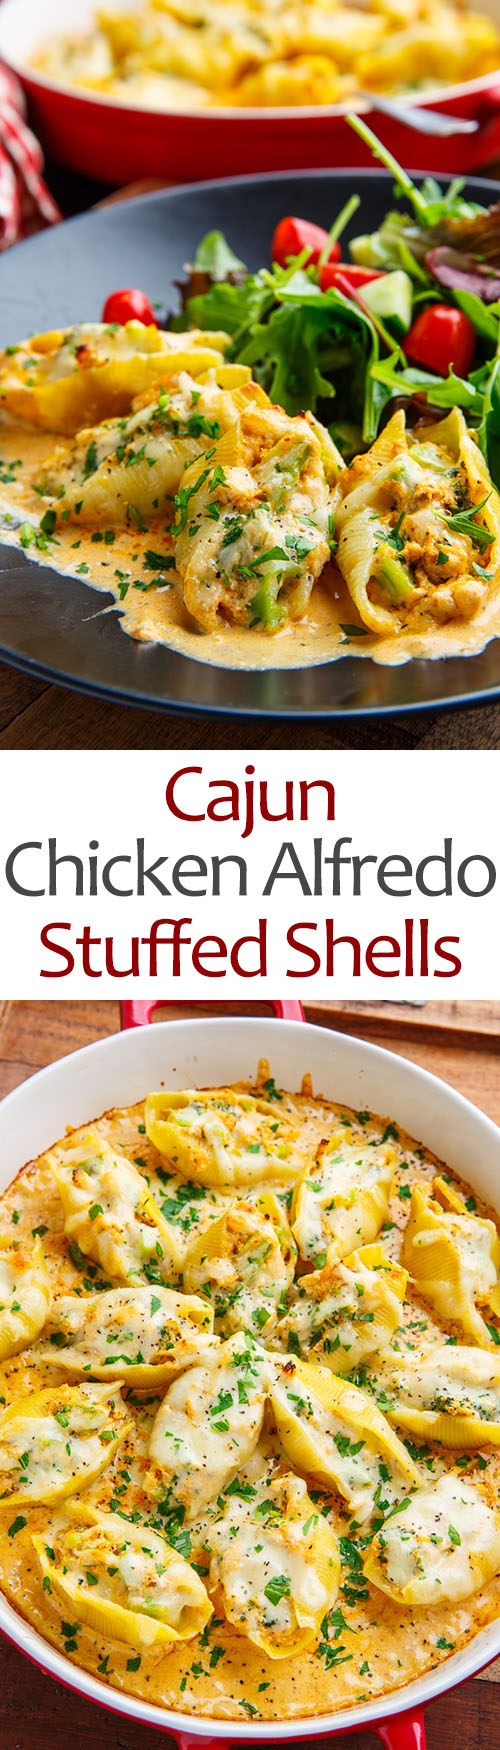 Cajun Chicken Alfredo Stuffed Shells